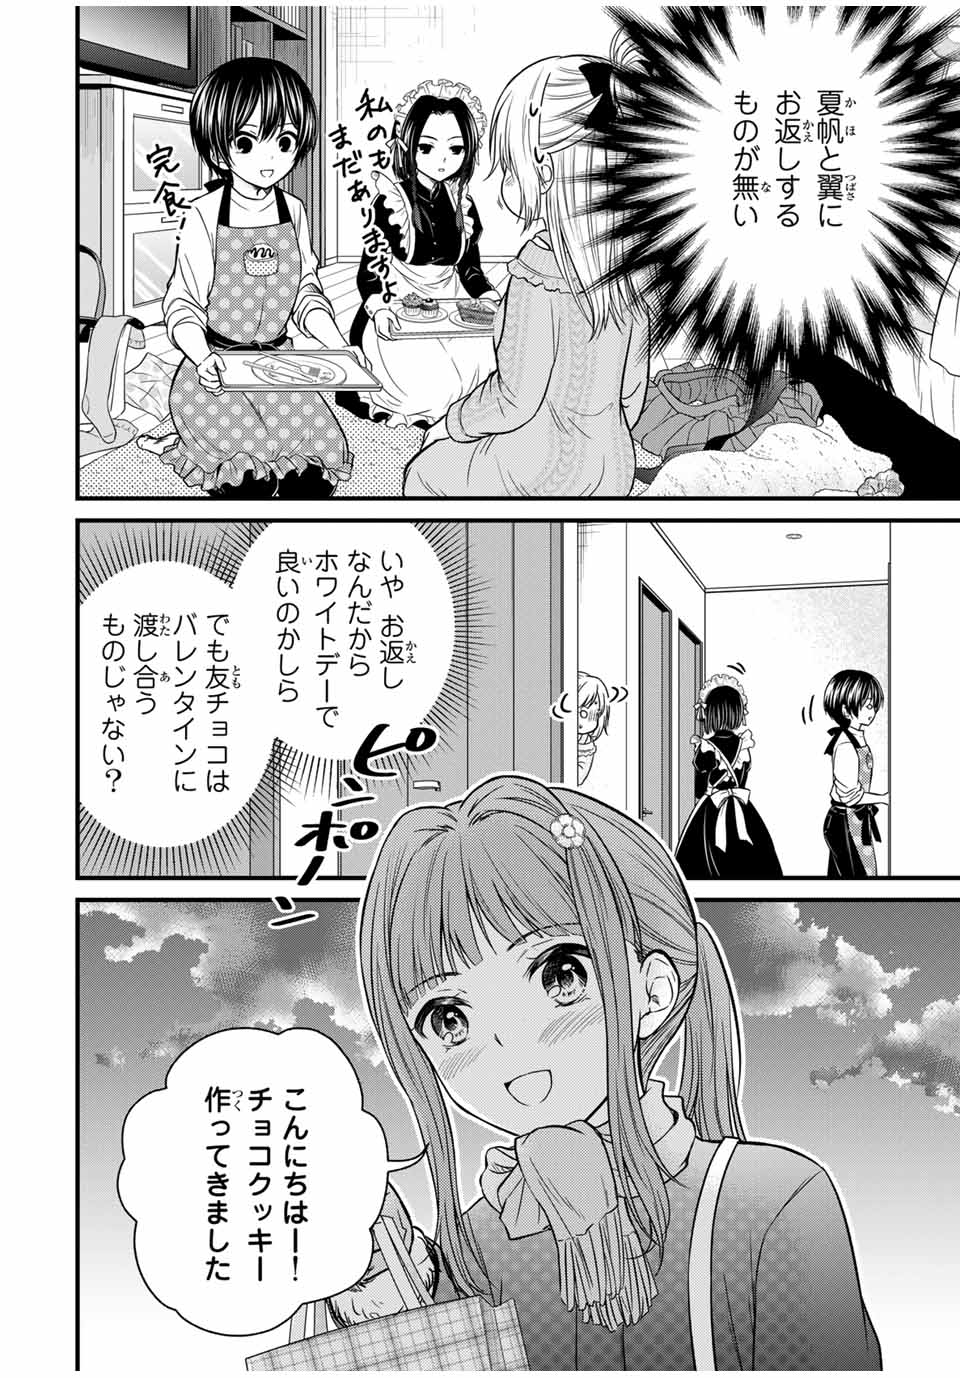 Ojousama no Shimobe - Chapter 134 - Page 4